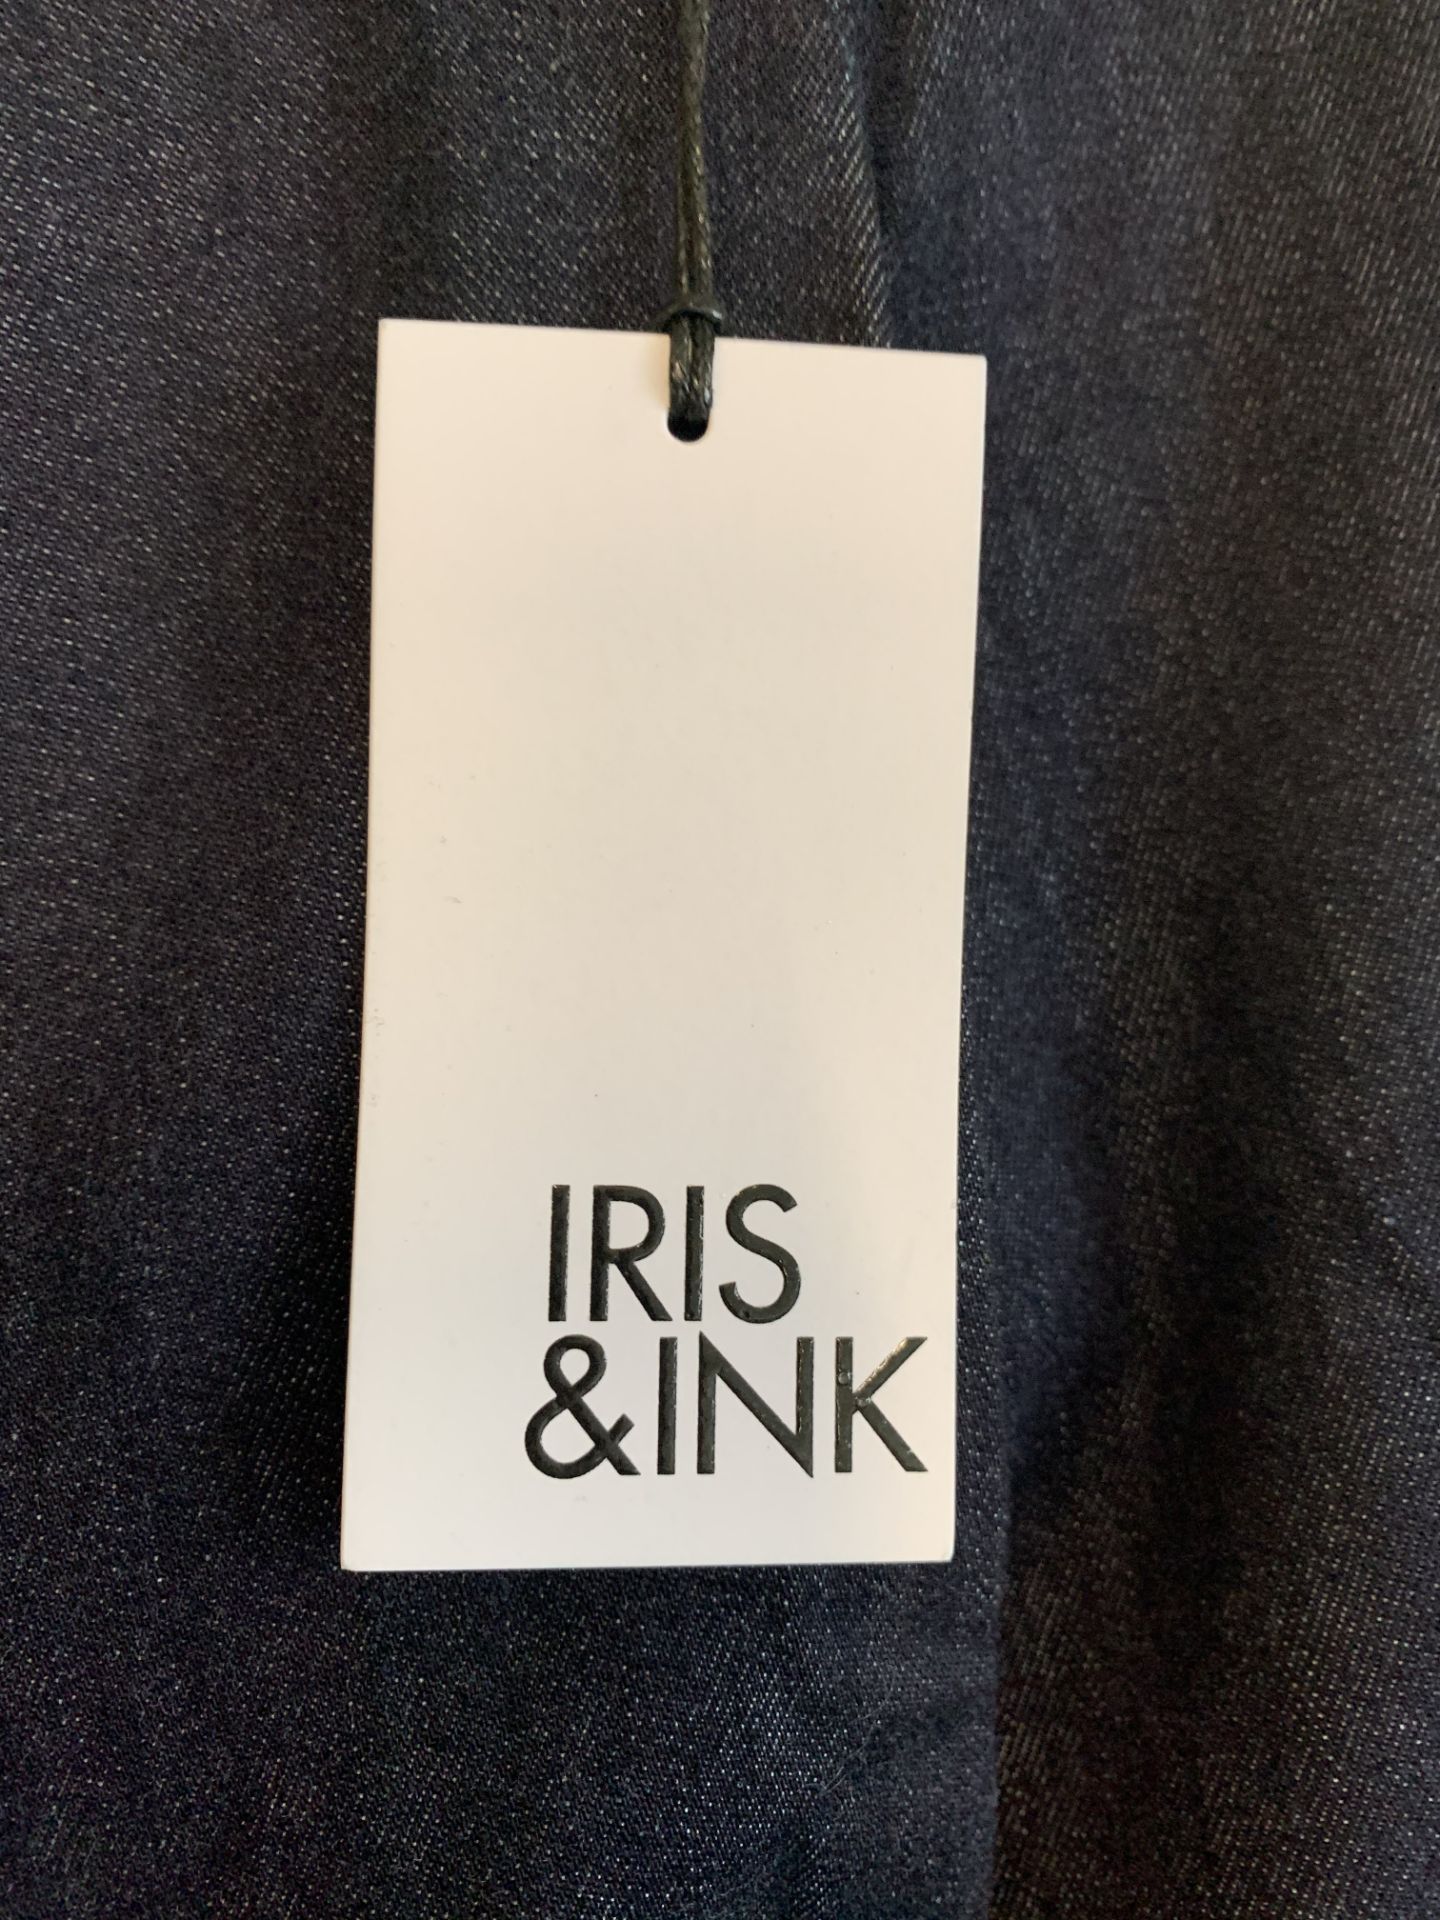 Iris & Ink Women's 3/4-length Short jeans - Image 2 of 2